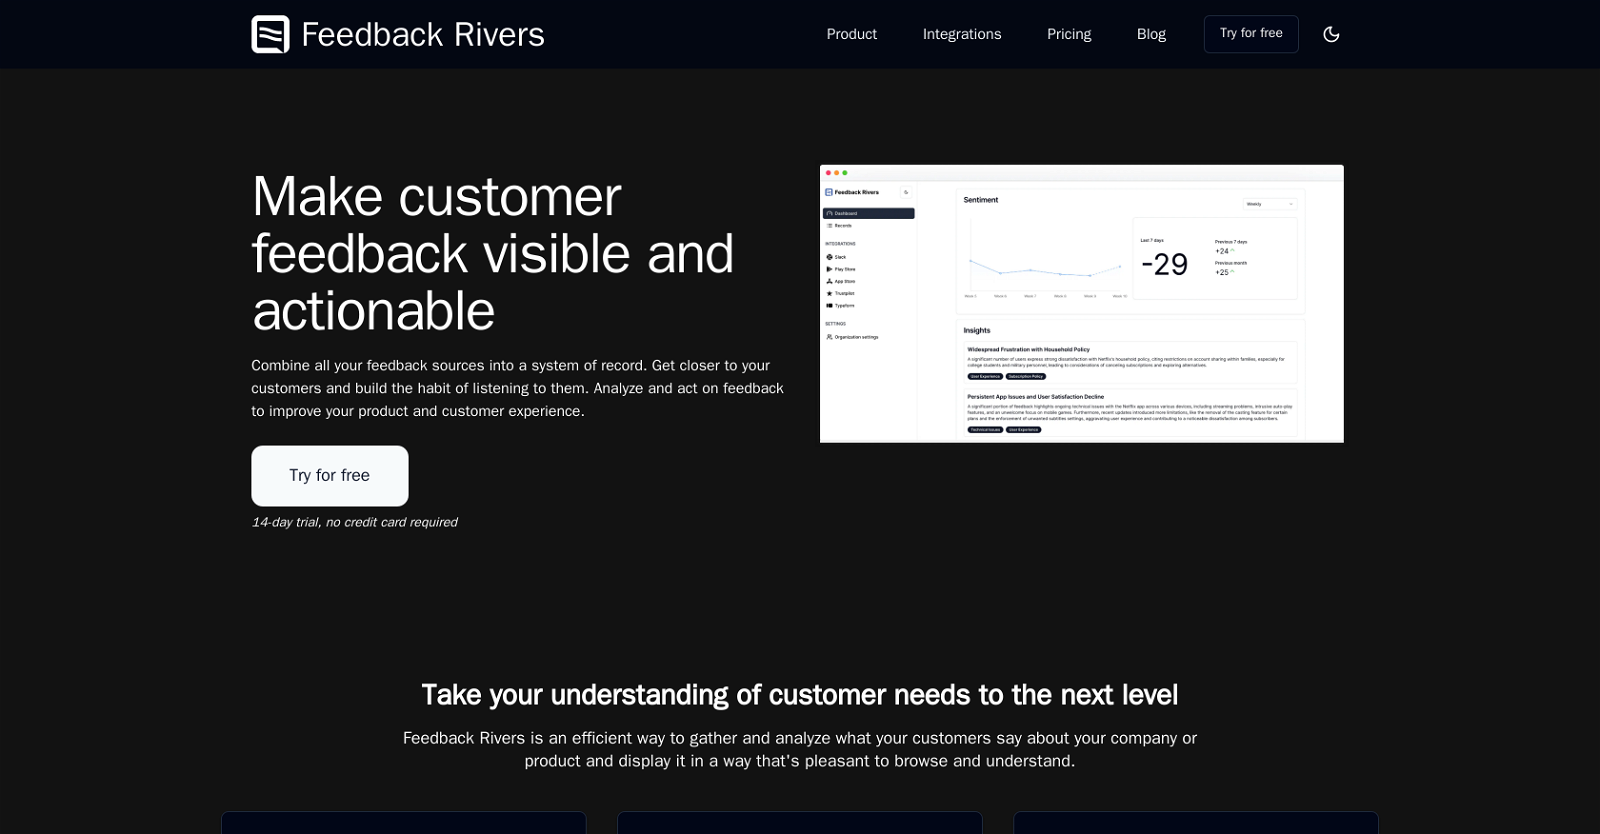 Feedback Rivers website